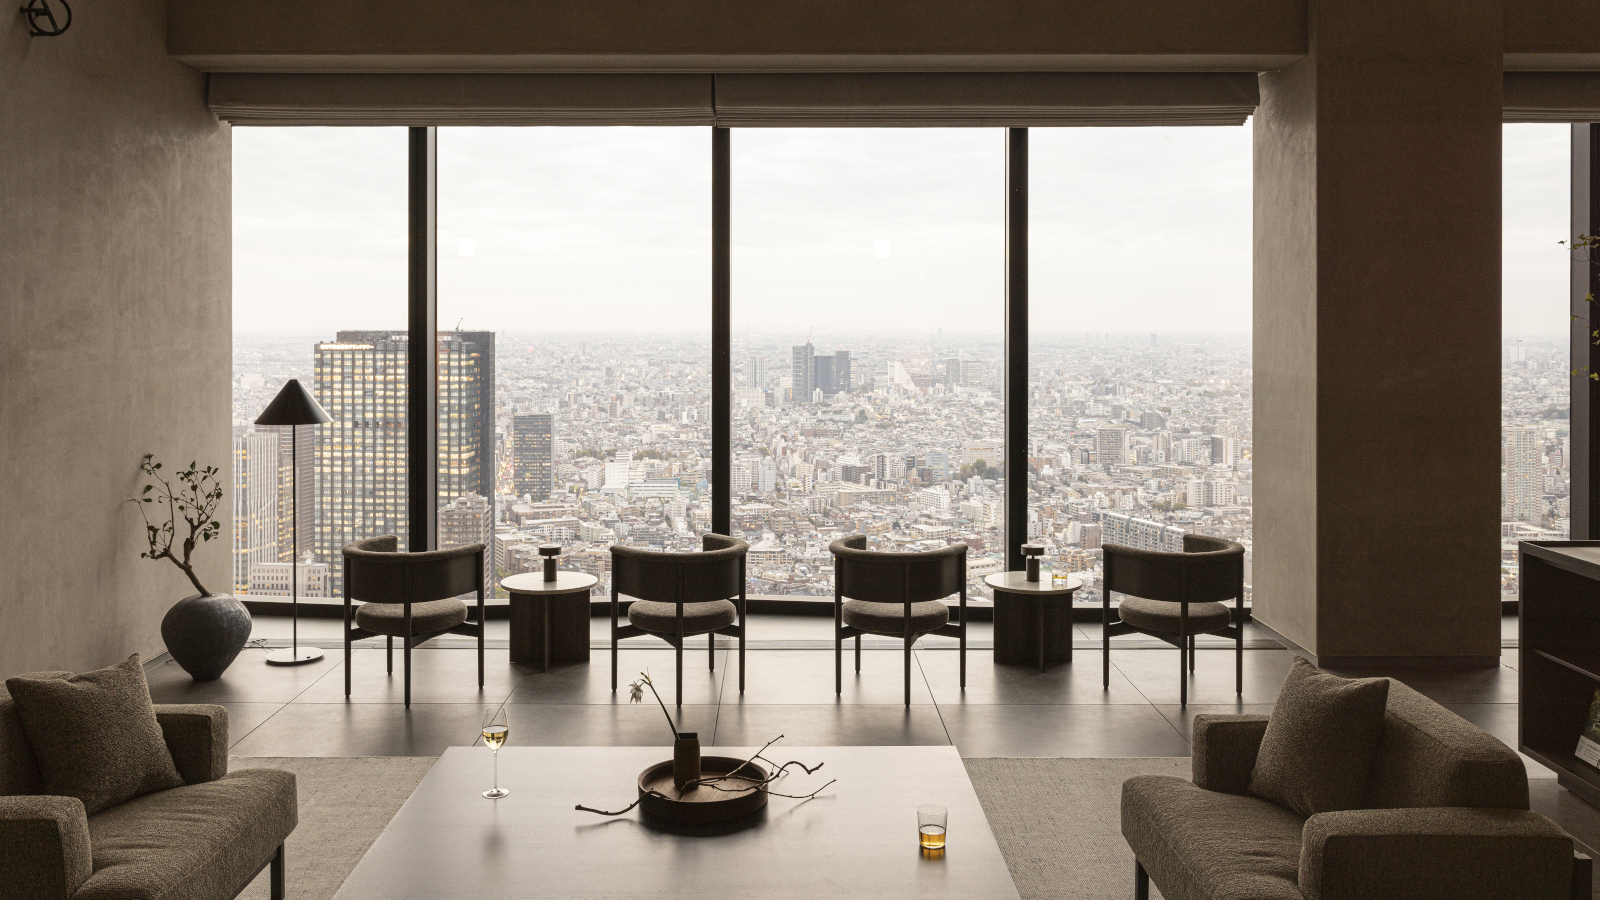 Tokyo's Bellustar Hotel: minimalist interiors, great views | Wallpaper